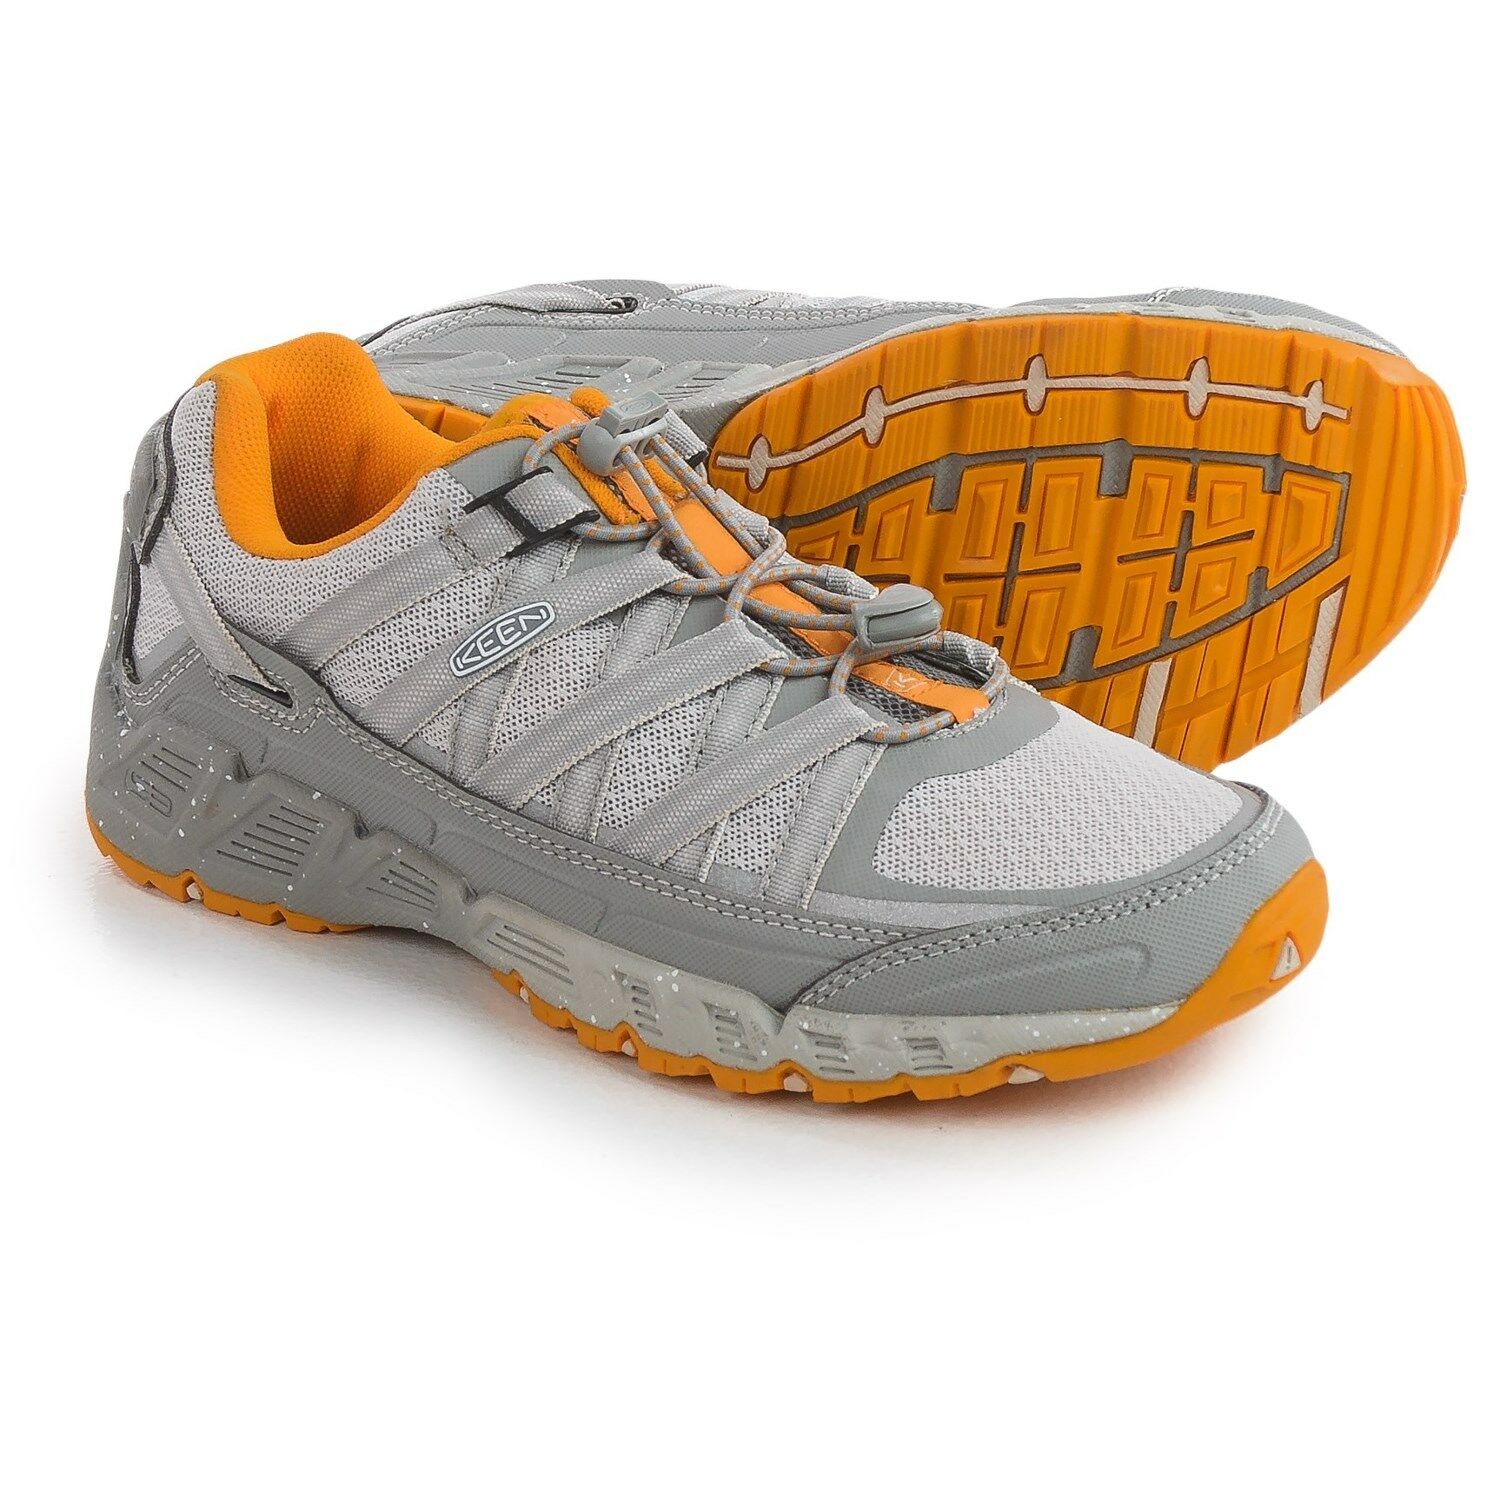 NIB Keen Womens 5 Versatrail Low Hiking Shoes Boots Gray Saffron Euro 35 NEW